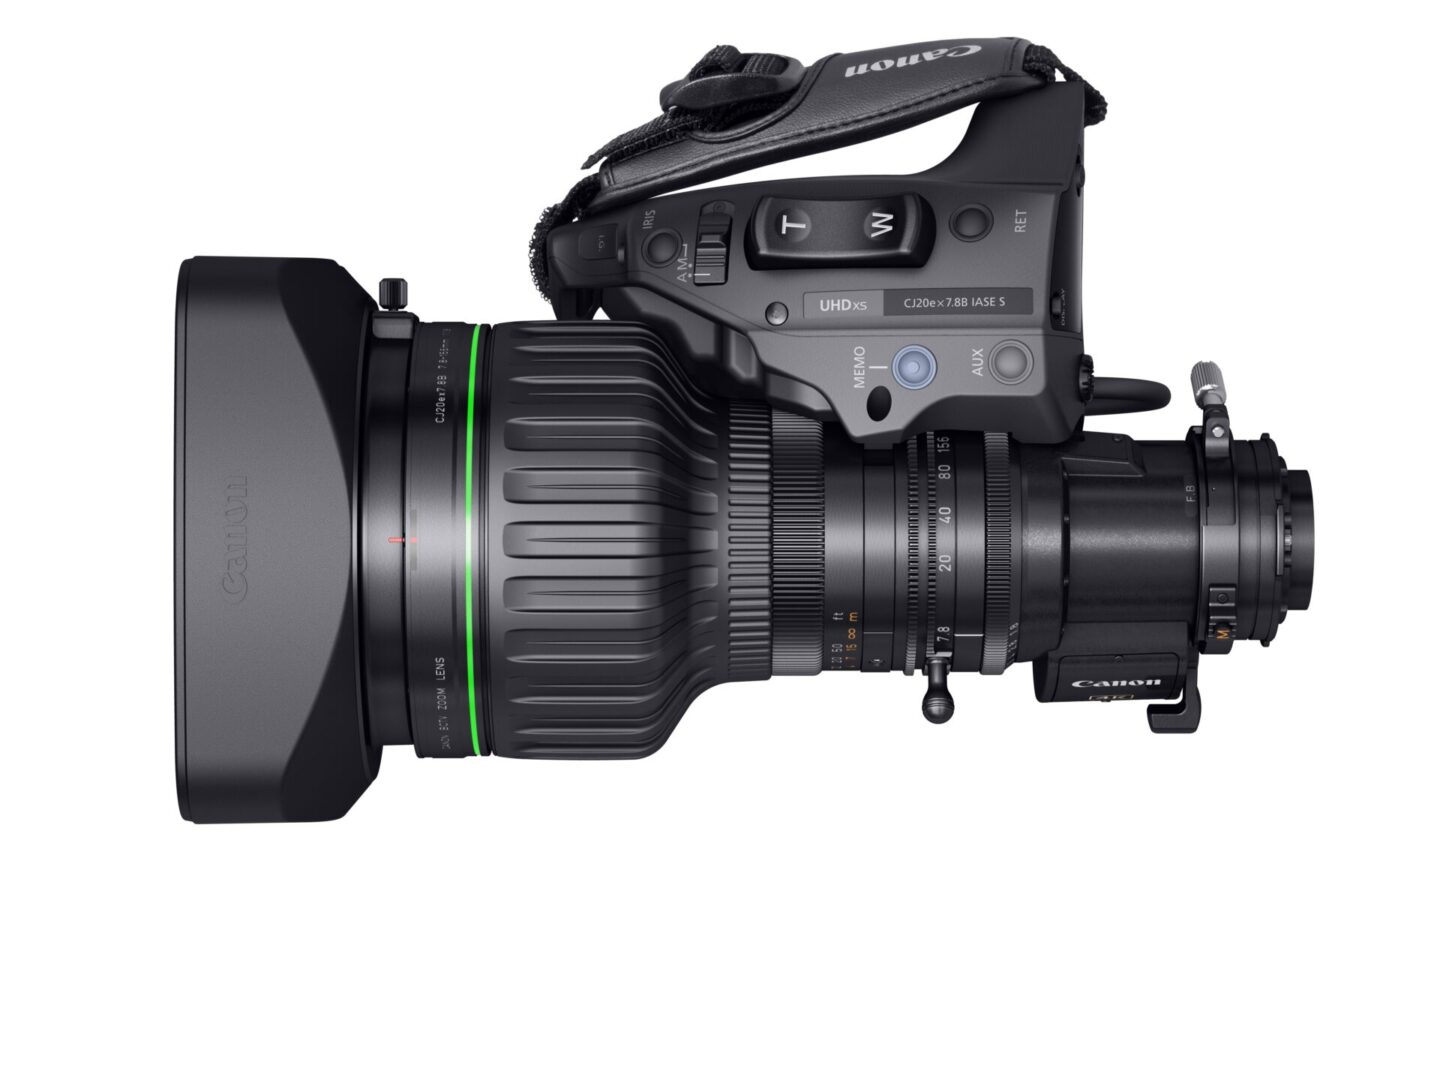 Canon CJ20ex7.8B IASE-S - Broadcast Technology & Systems | C2S Media